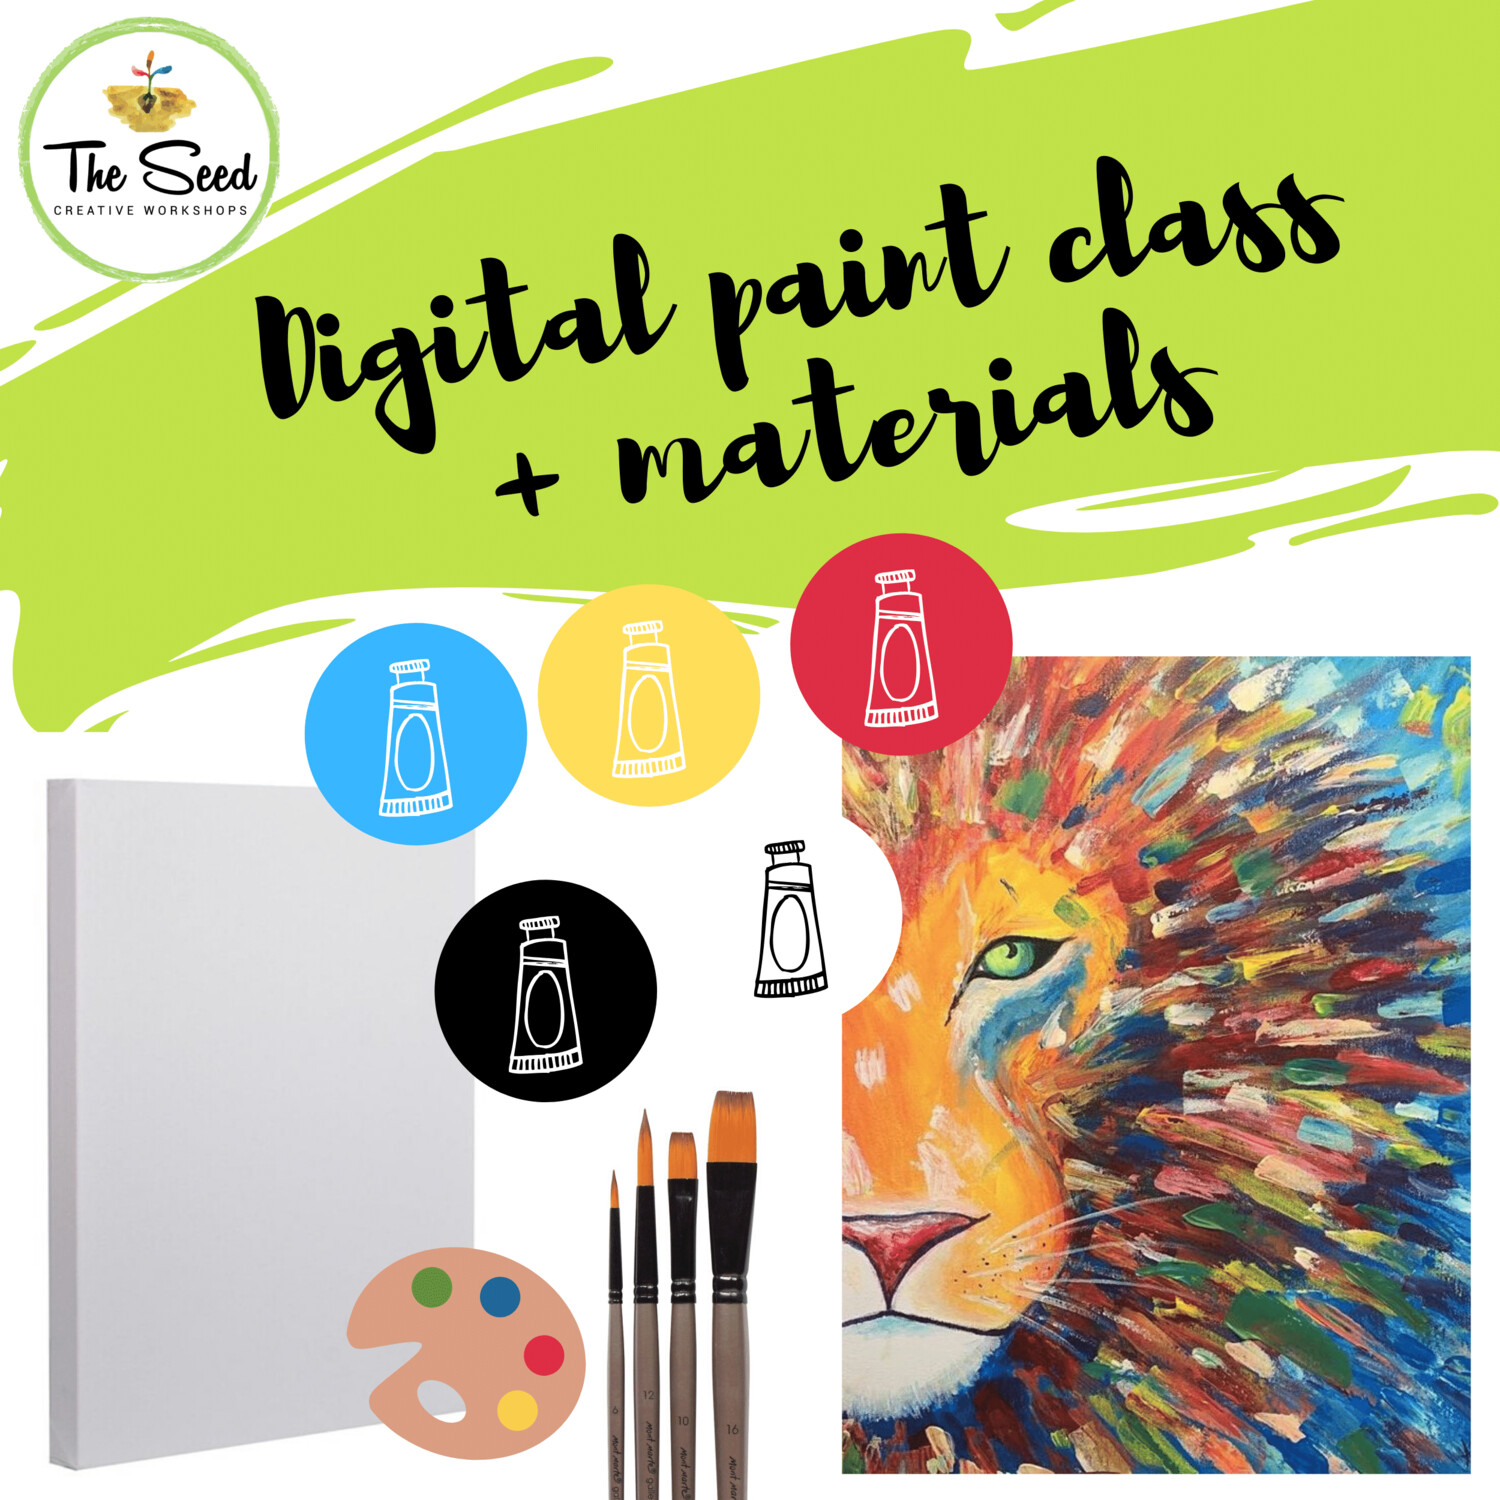 Lion Digital painting class + materials